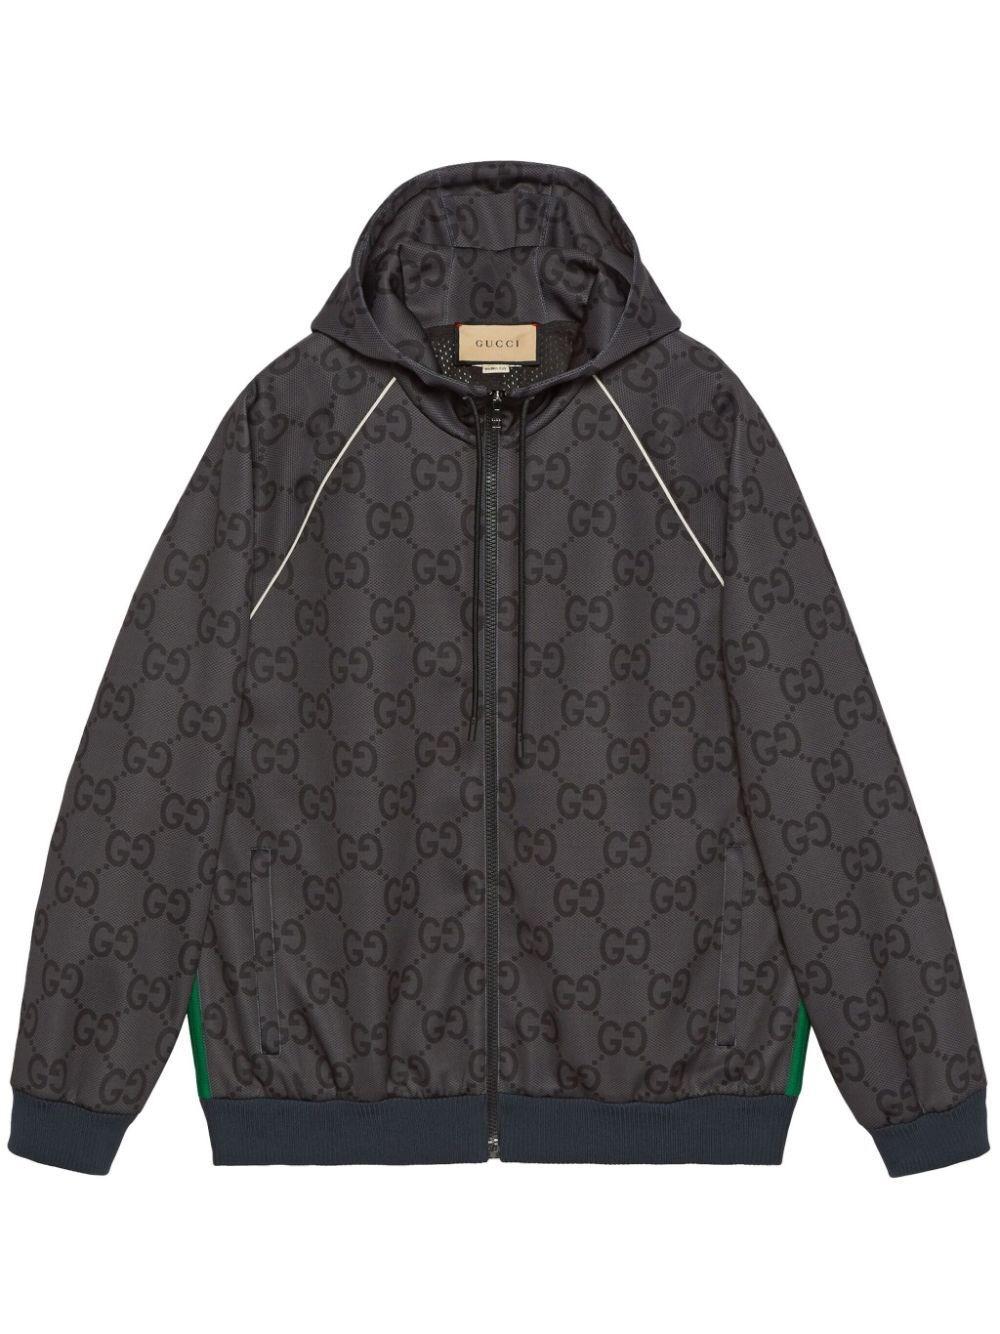 Gucci Full-zip Hoodie in Gray for Men